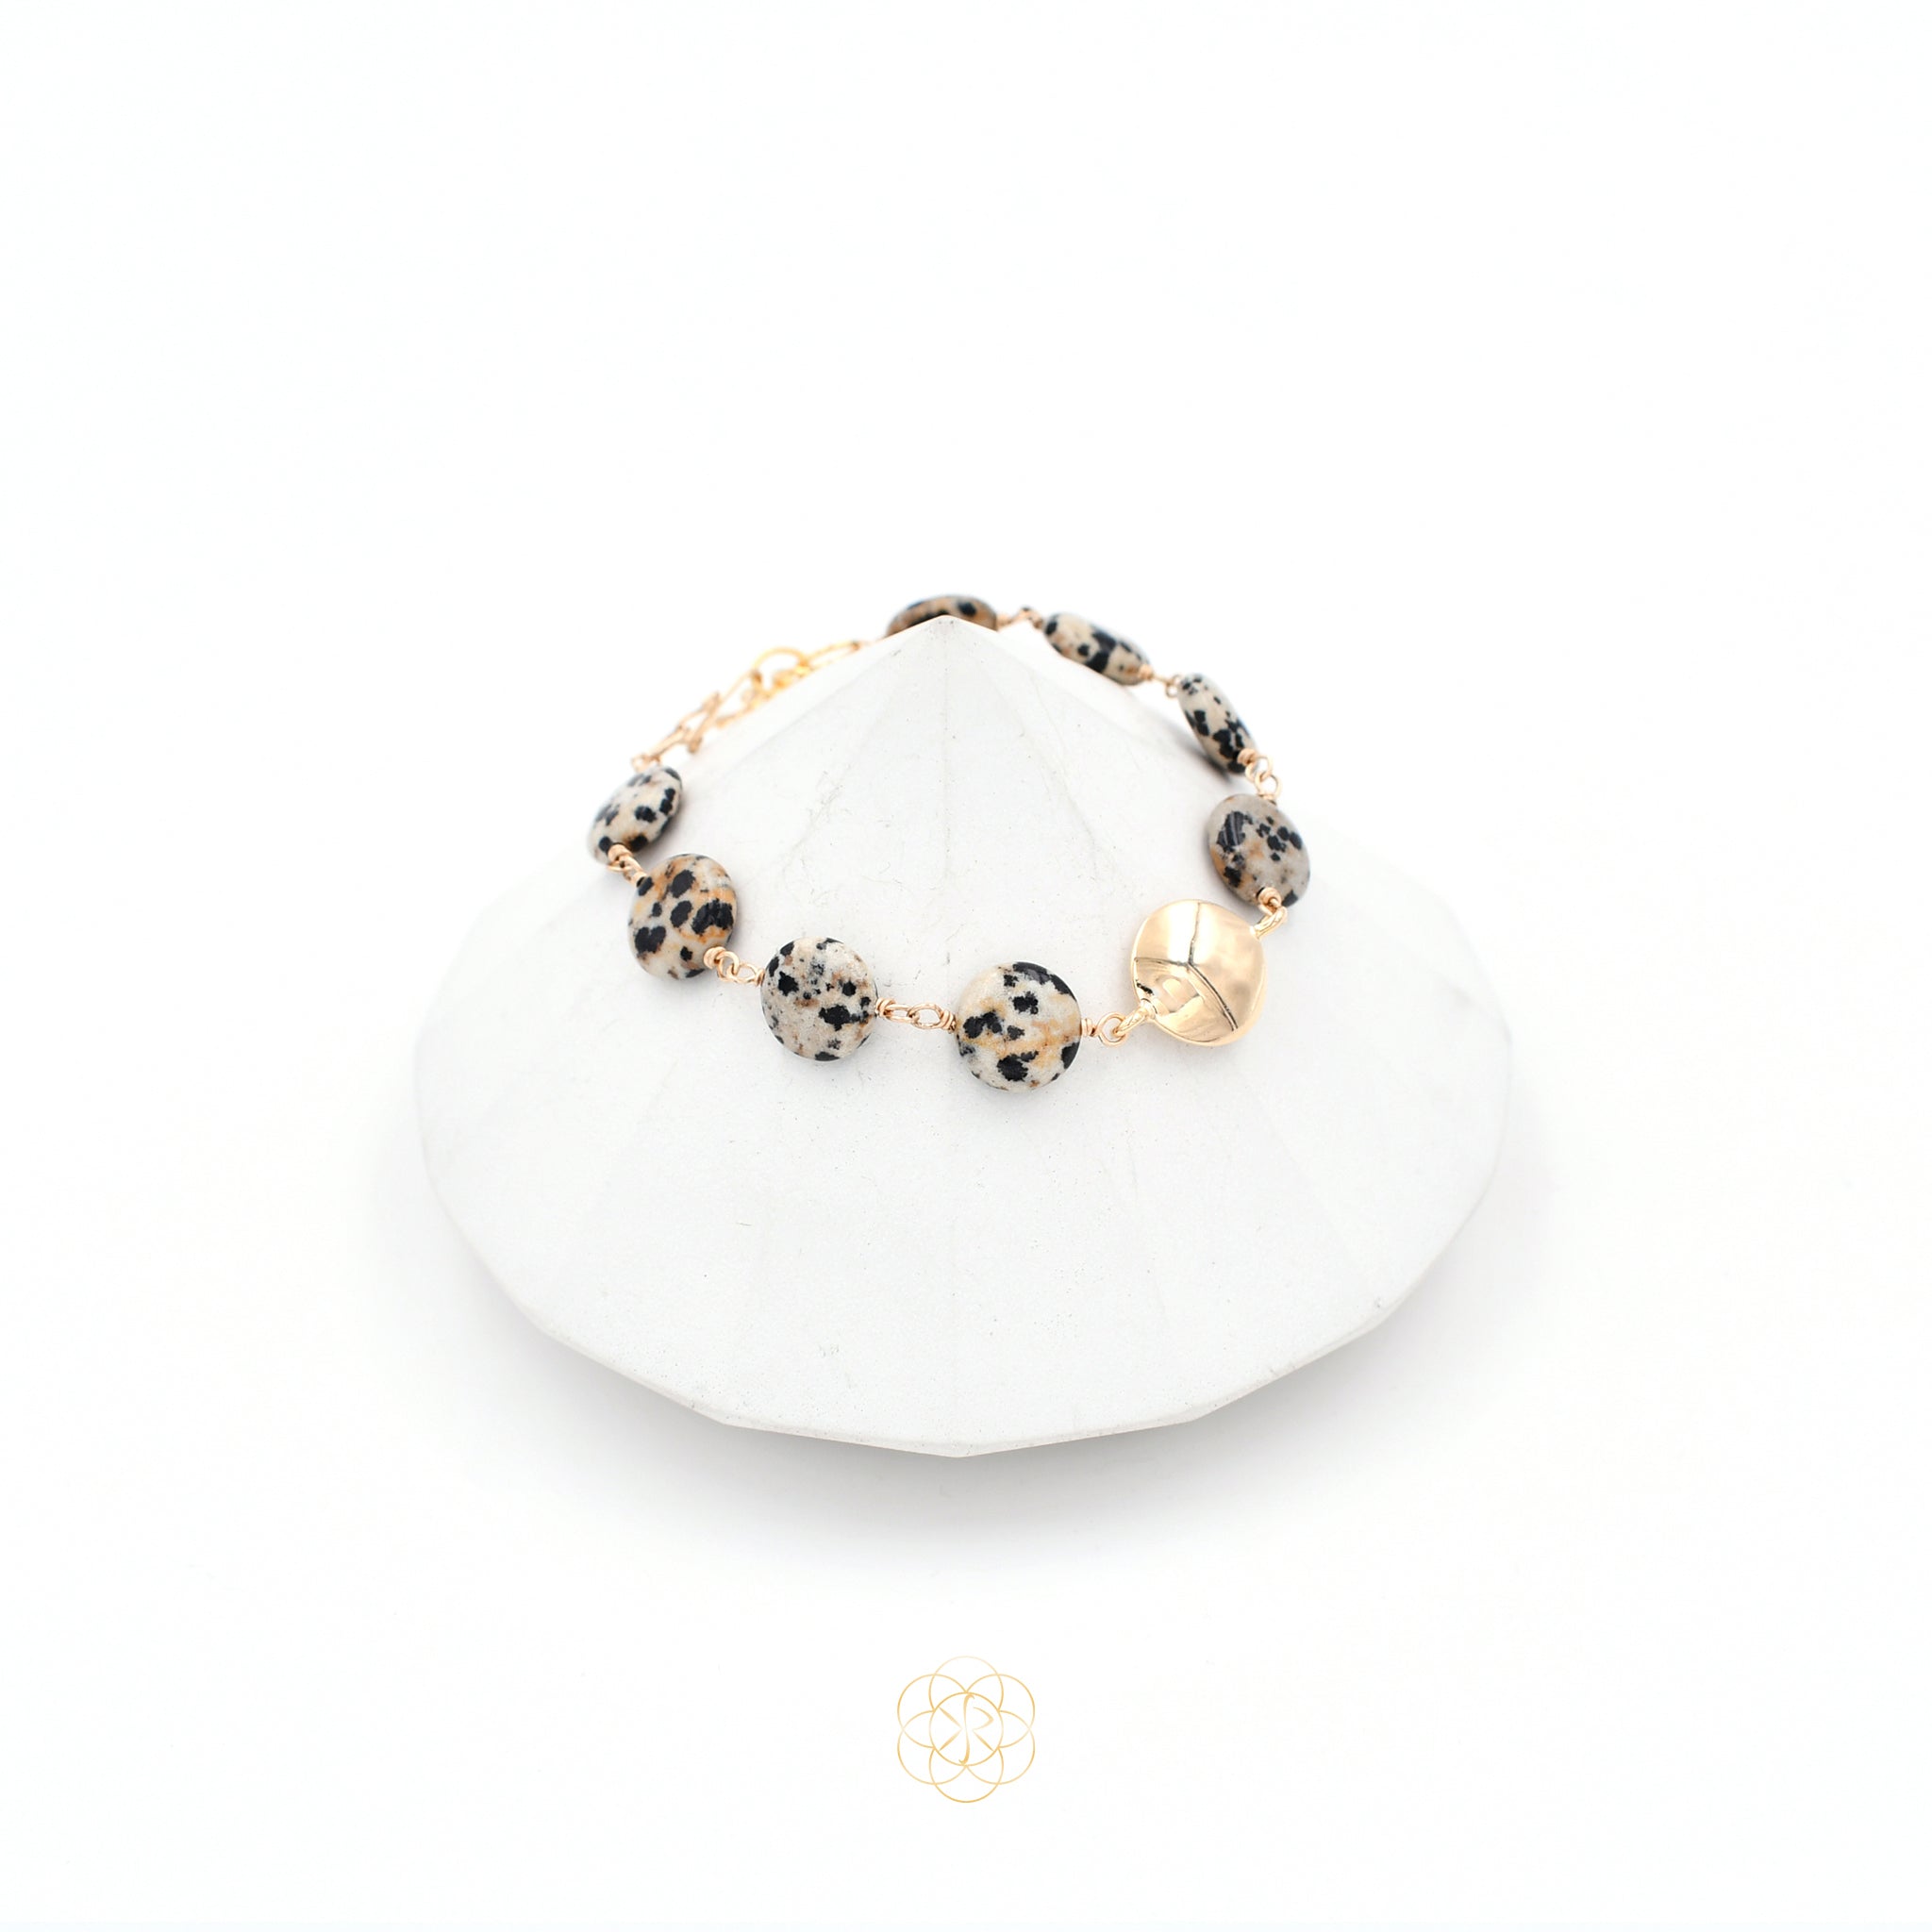 Shop Bracelets | Kim R Sanchez Jewelry